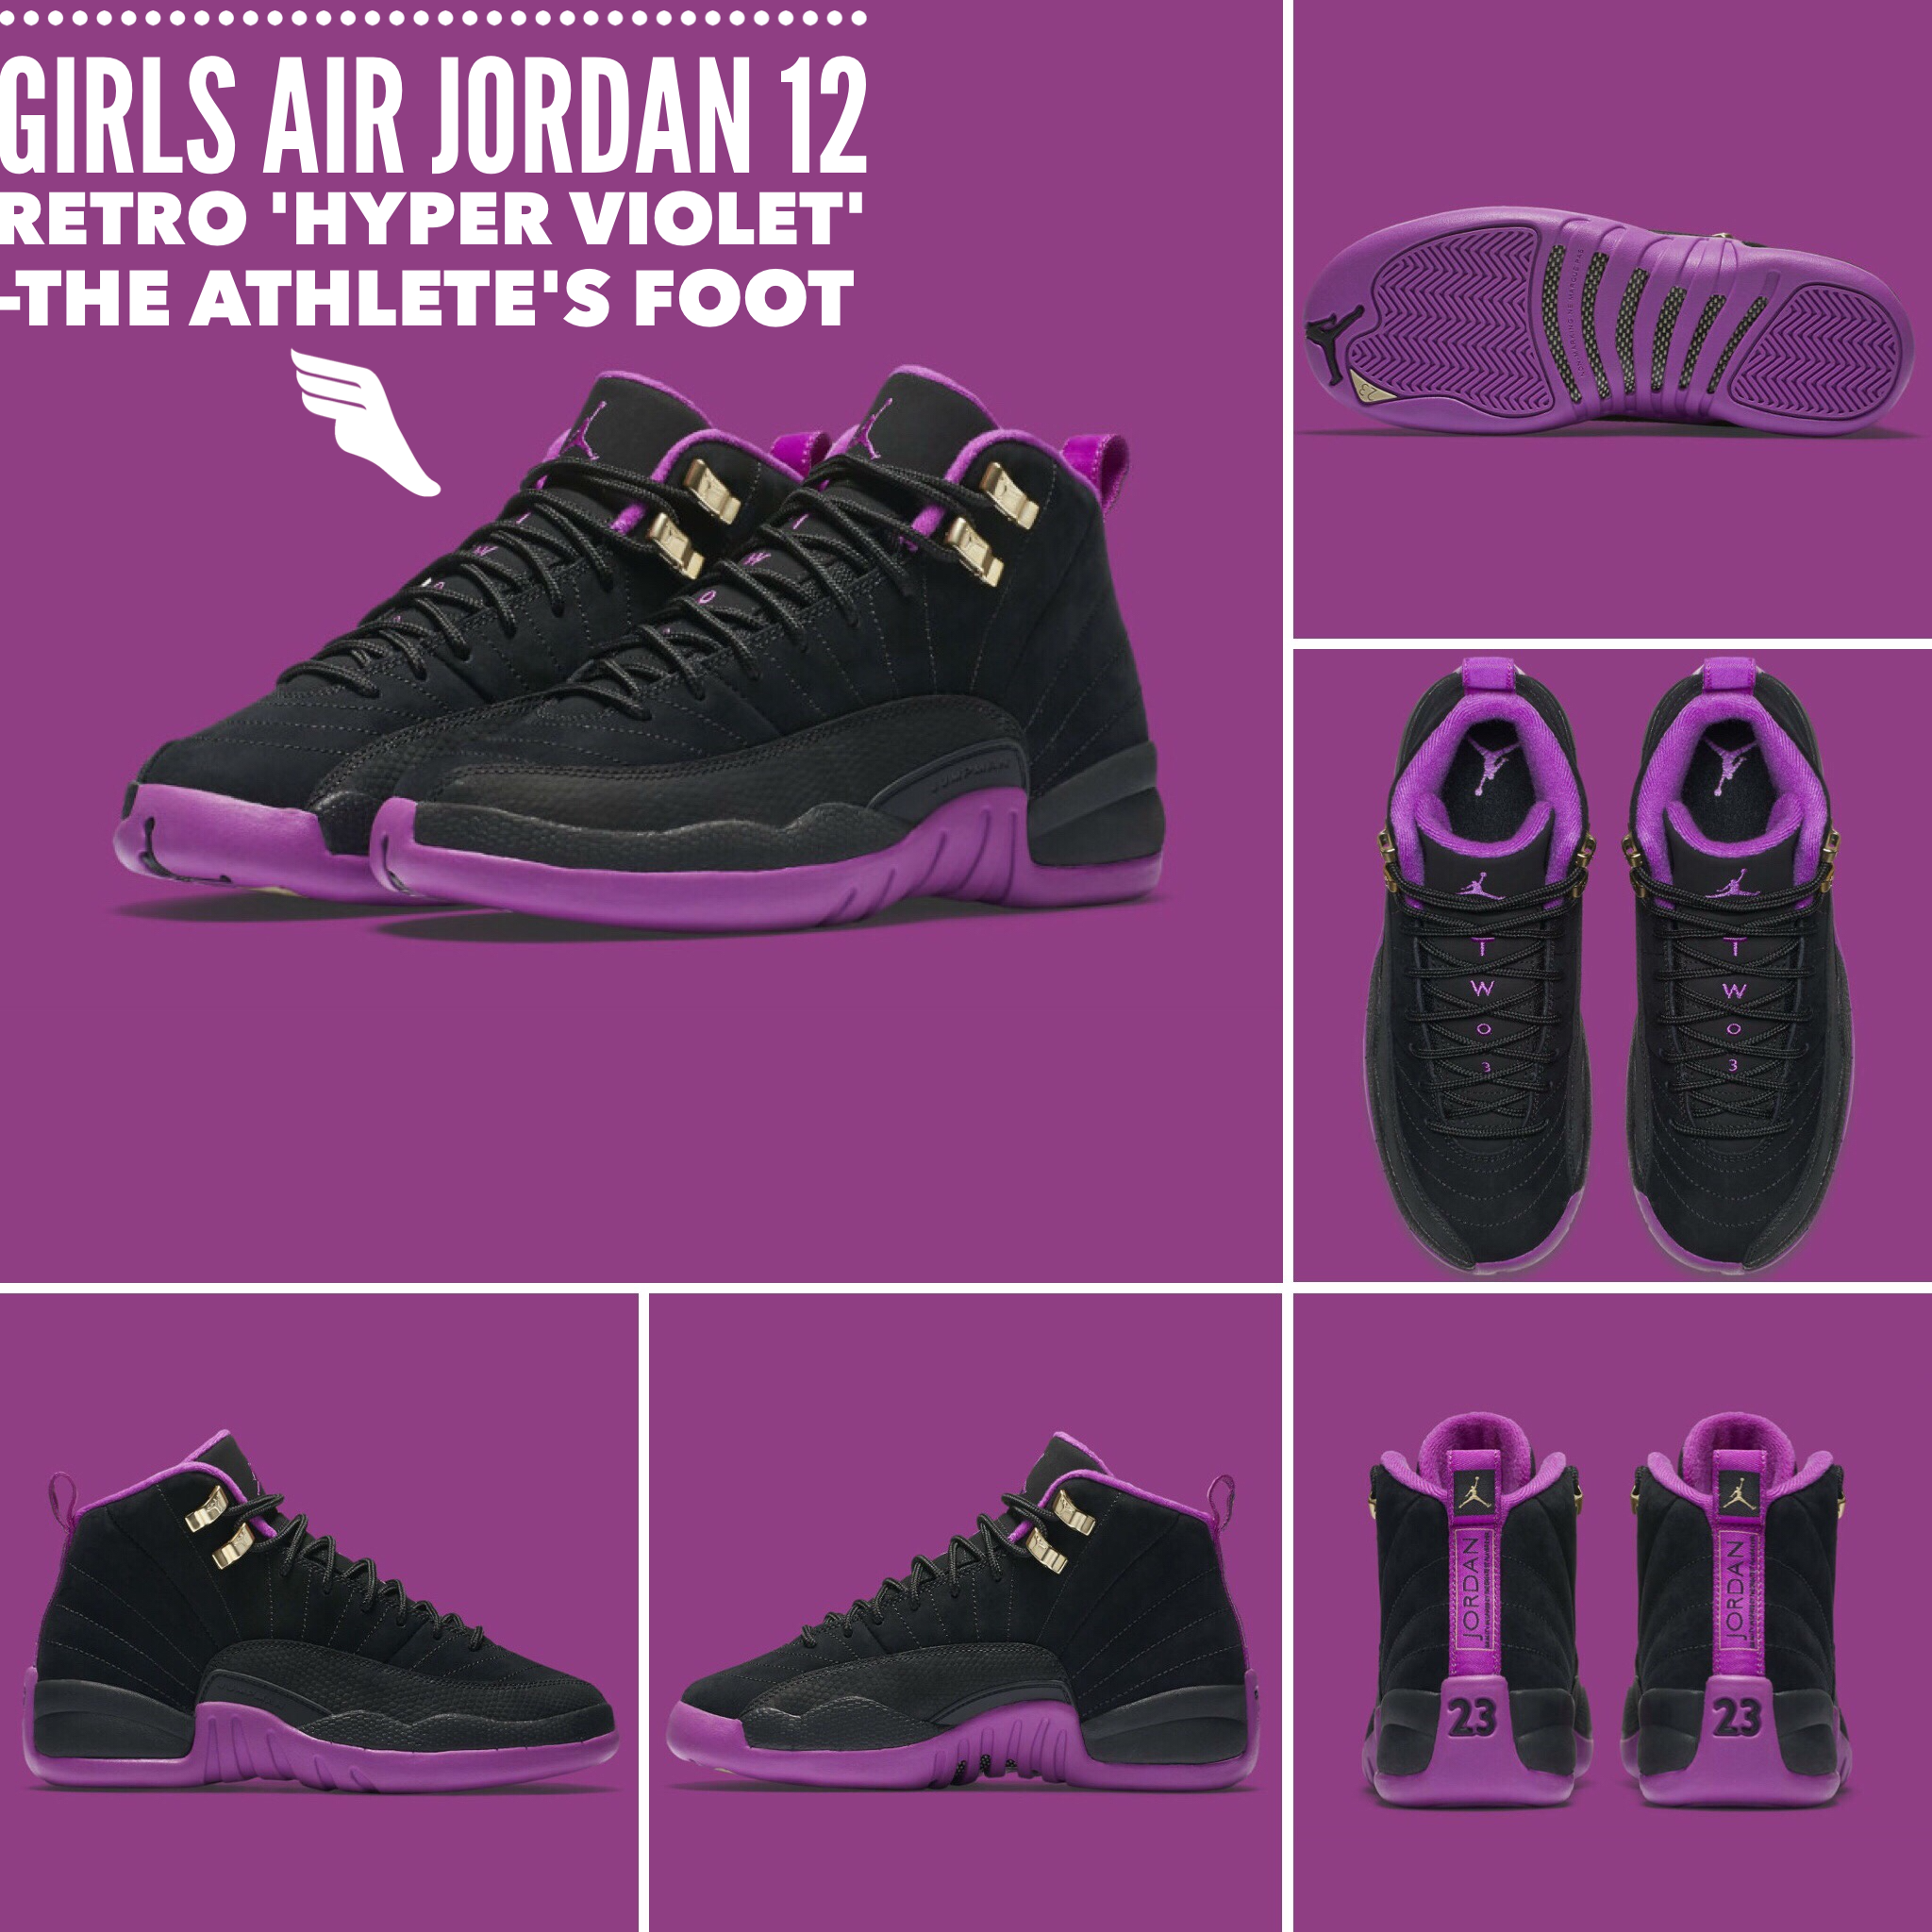 Girls Air Jordan 12 Retro Hyper Violet 